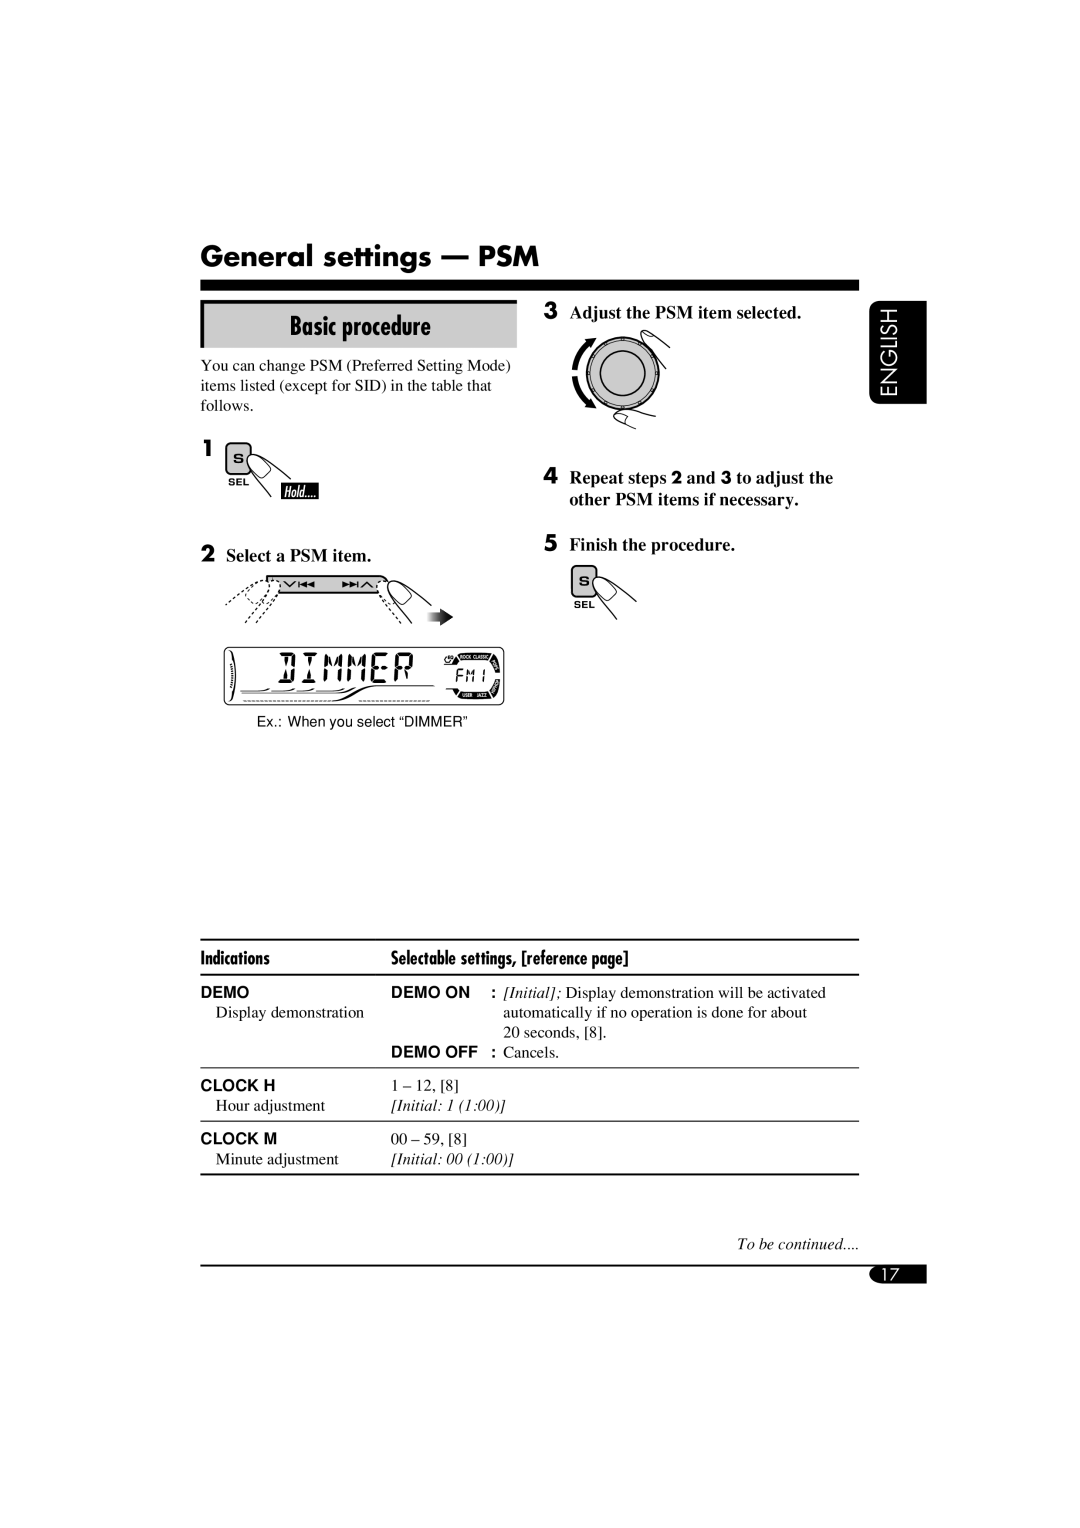 JVC KD-S52 manual General settings - PSM, Basic procedure, English, 2Select a PSM item, 3Adjust the PSM item selected, Demo 